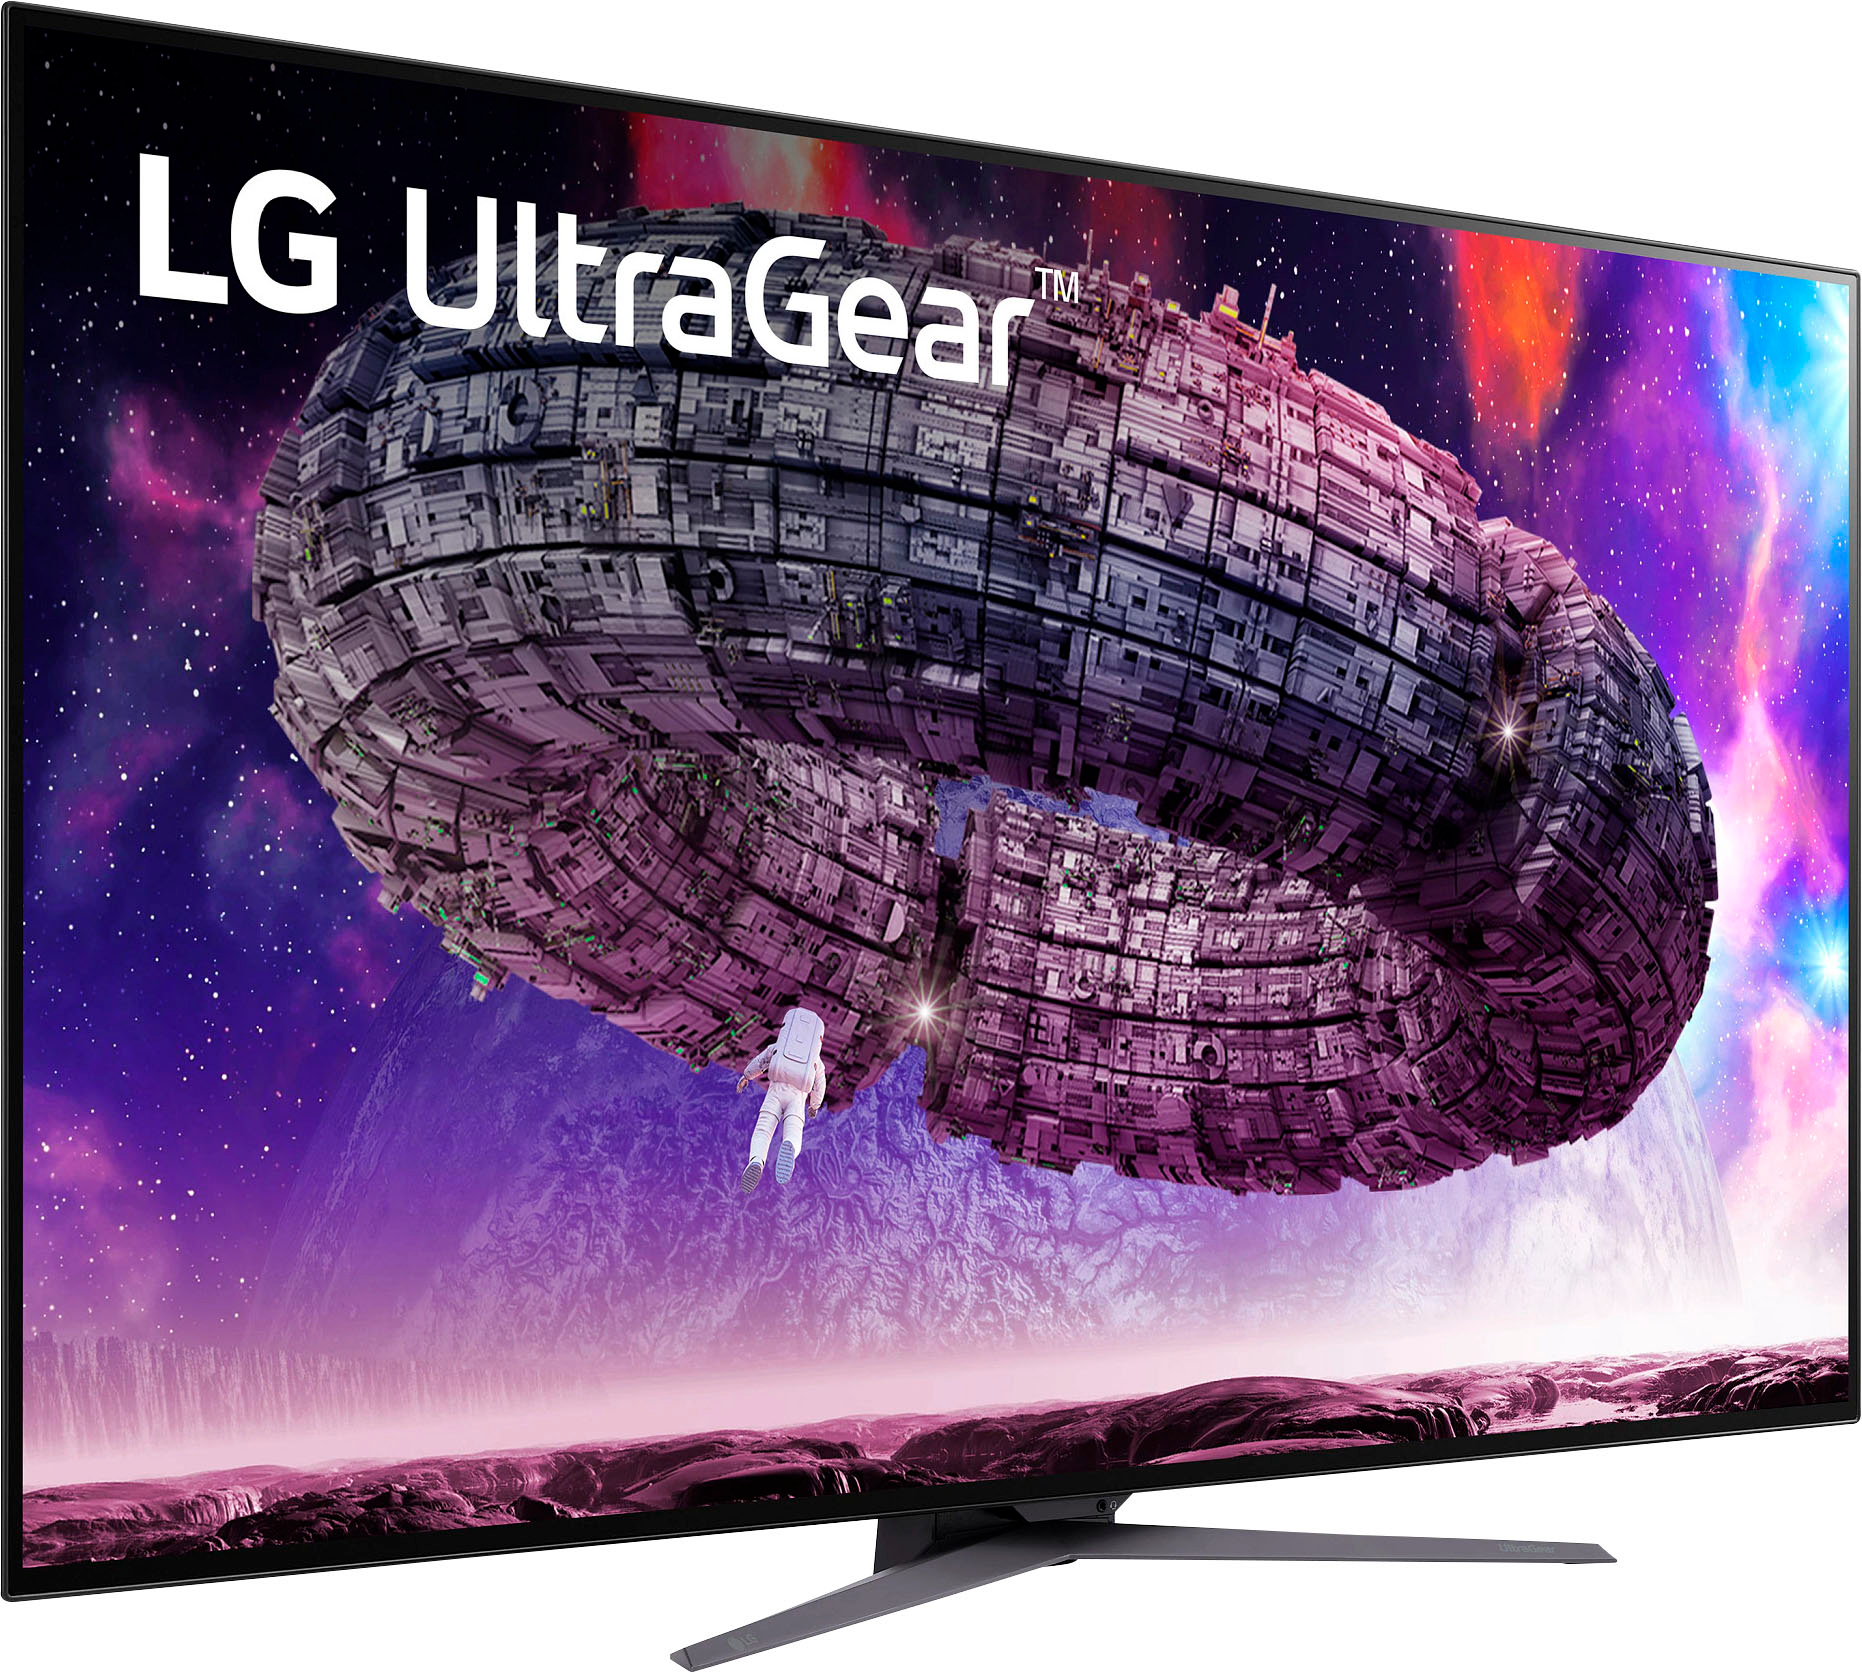 LG UltraGear Monitors Get Big OLED, ActiveSync Certification - CNET